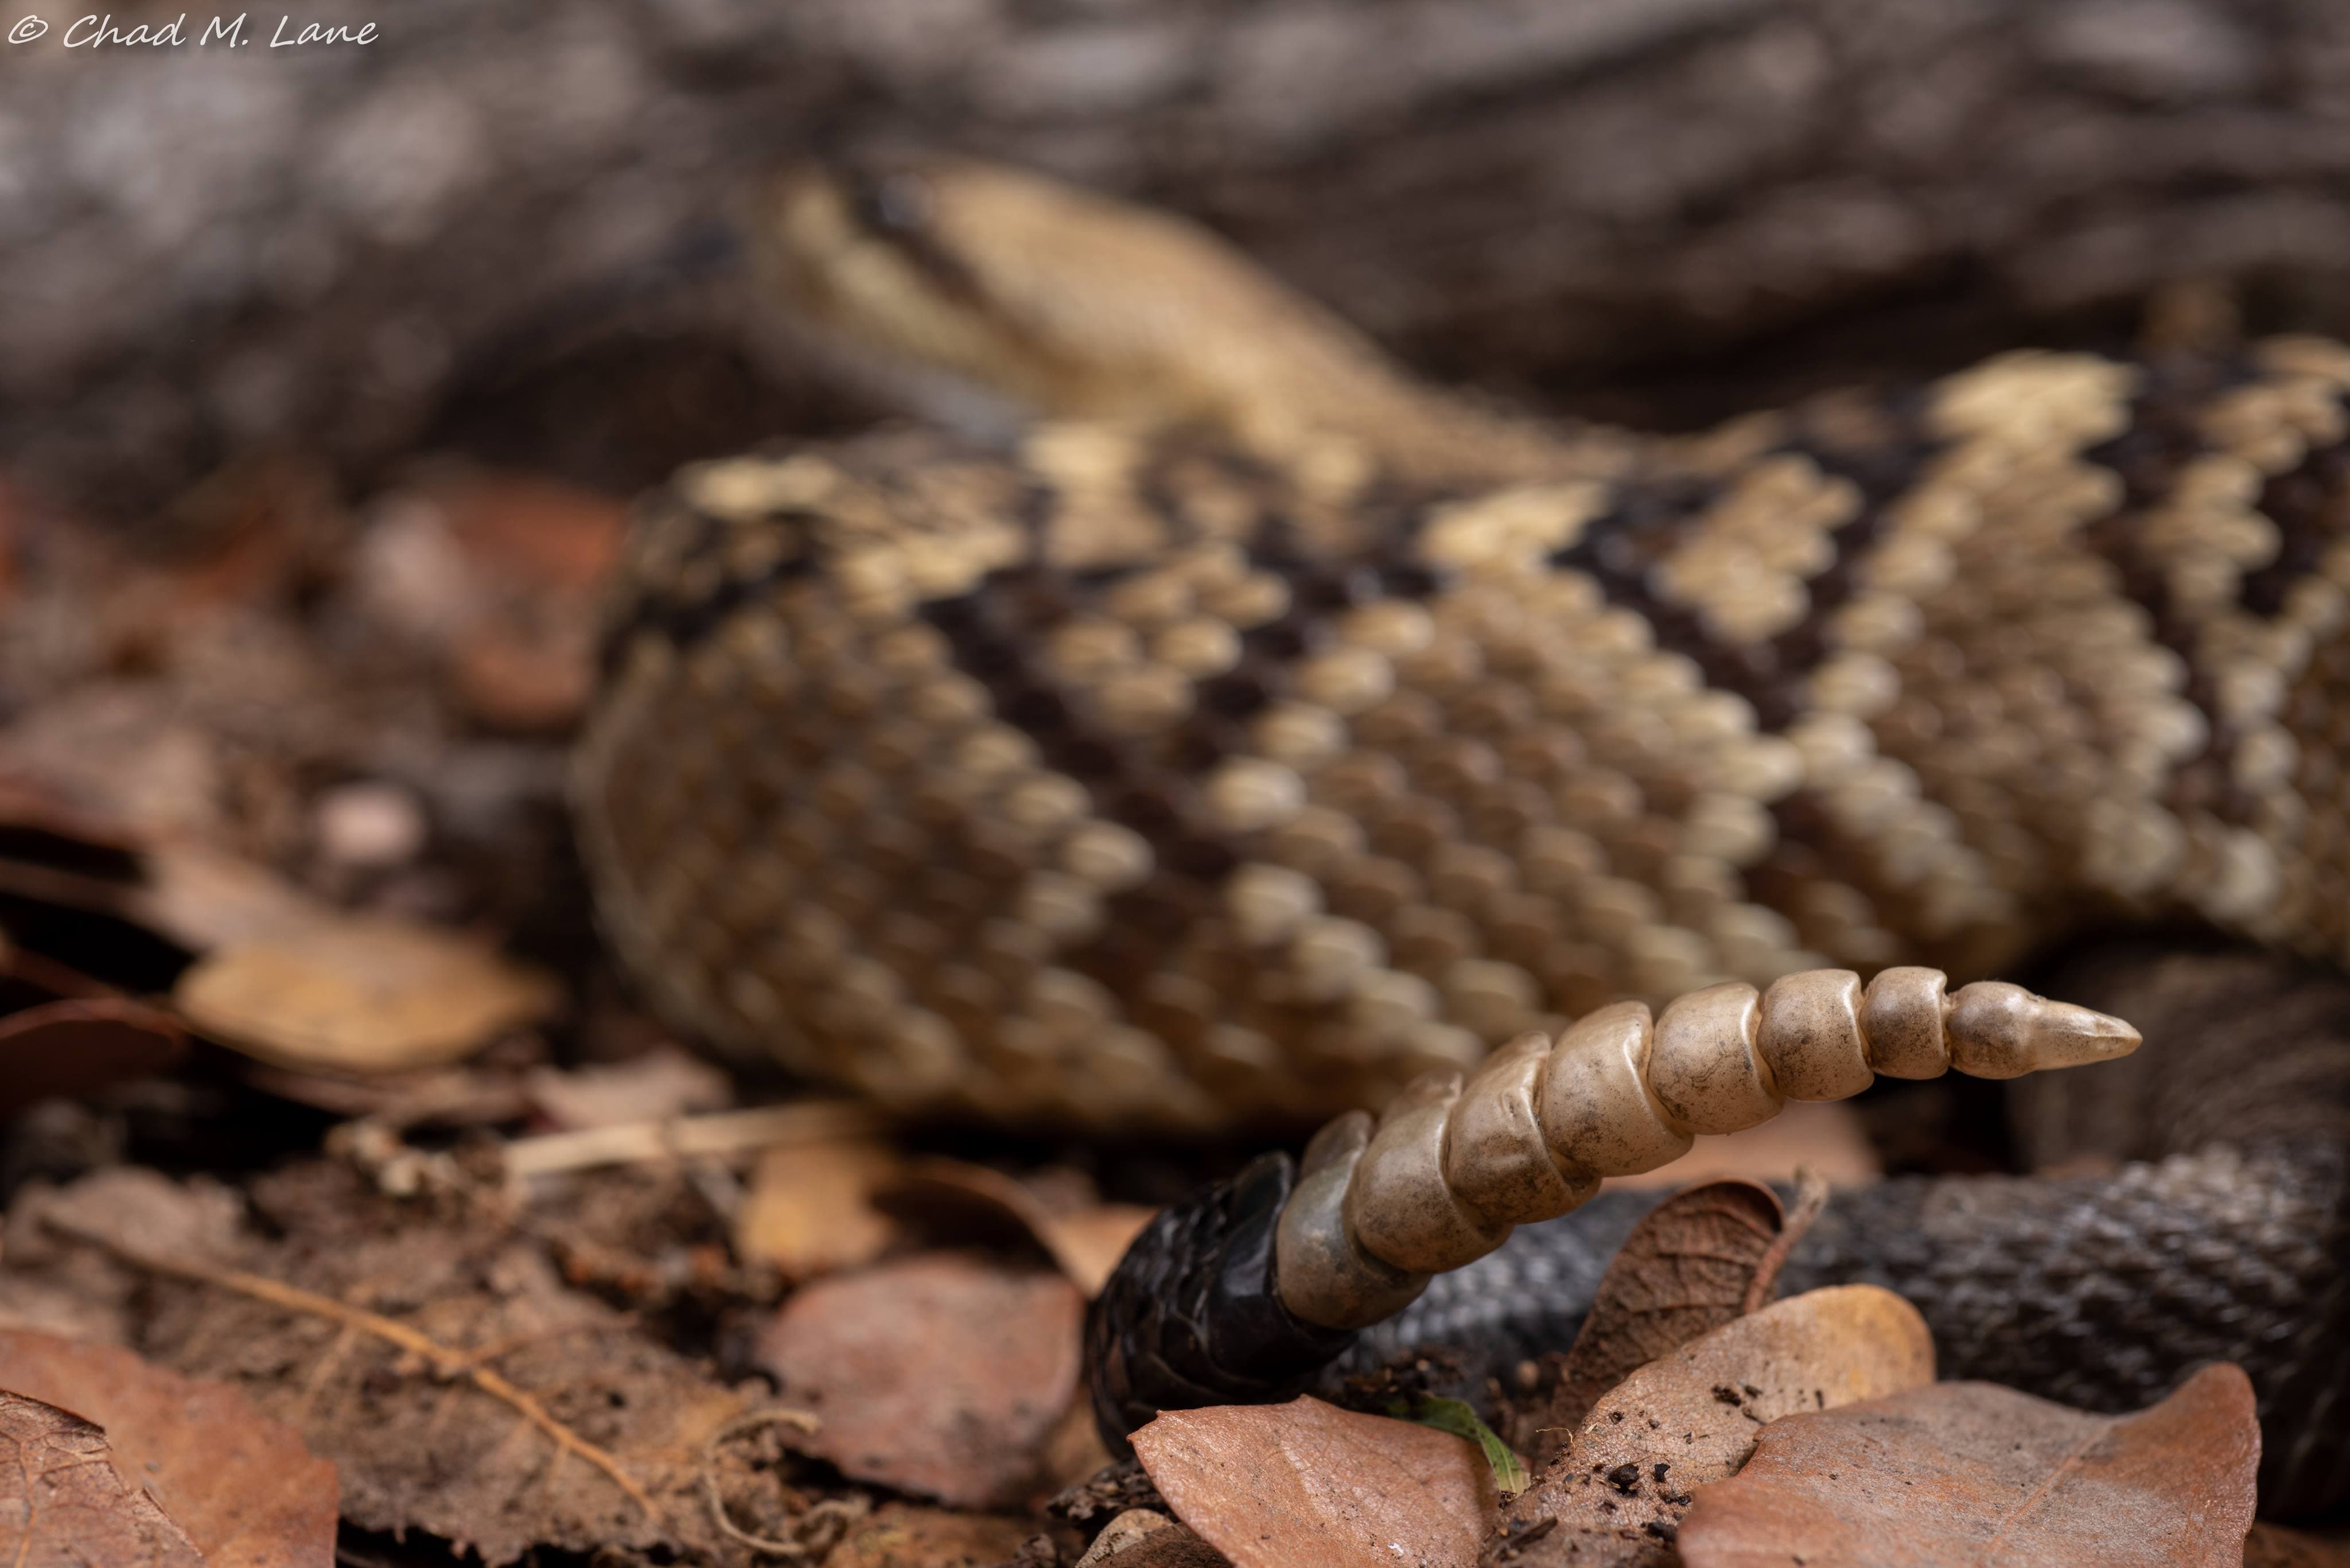 Western Diamond-backed Rattlesnake photo by Chad M. Lane